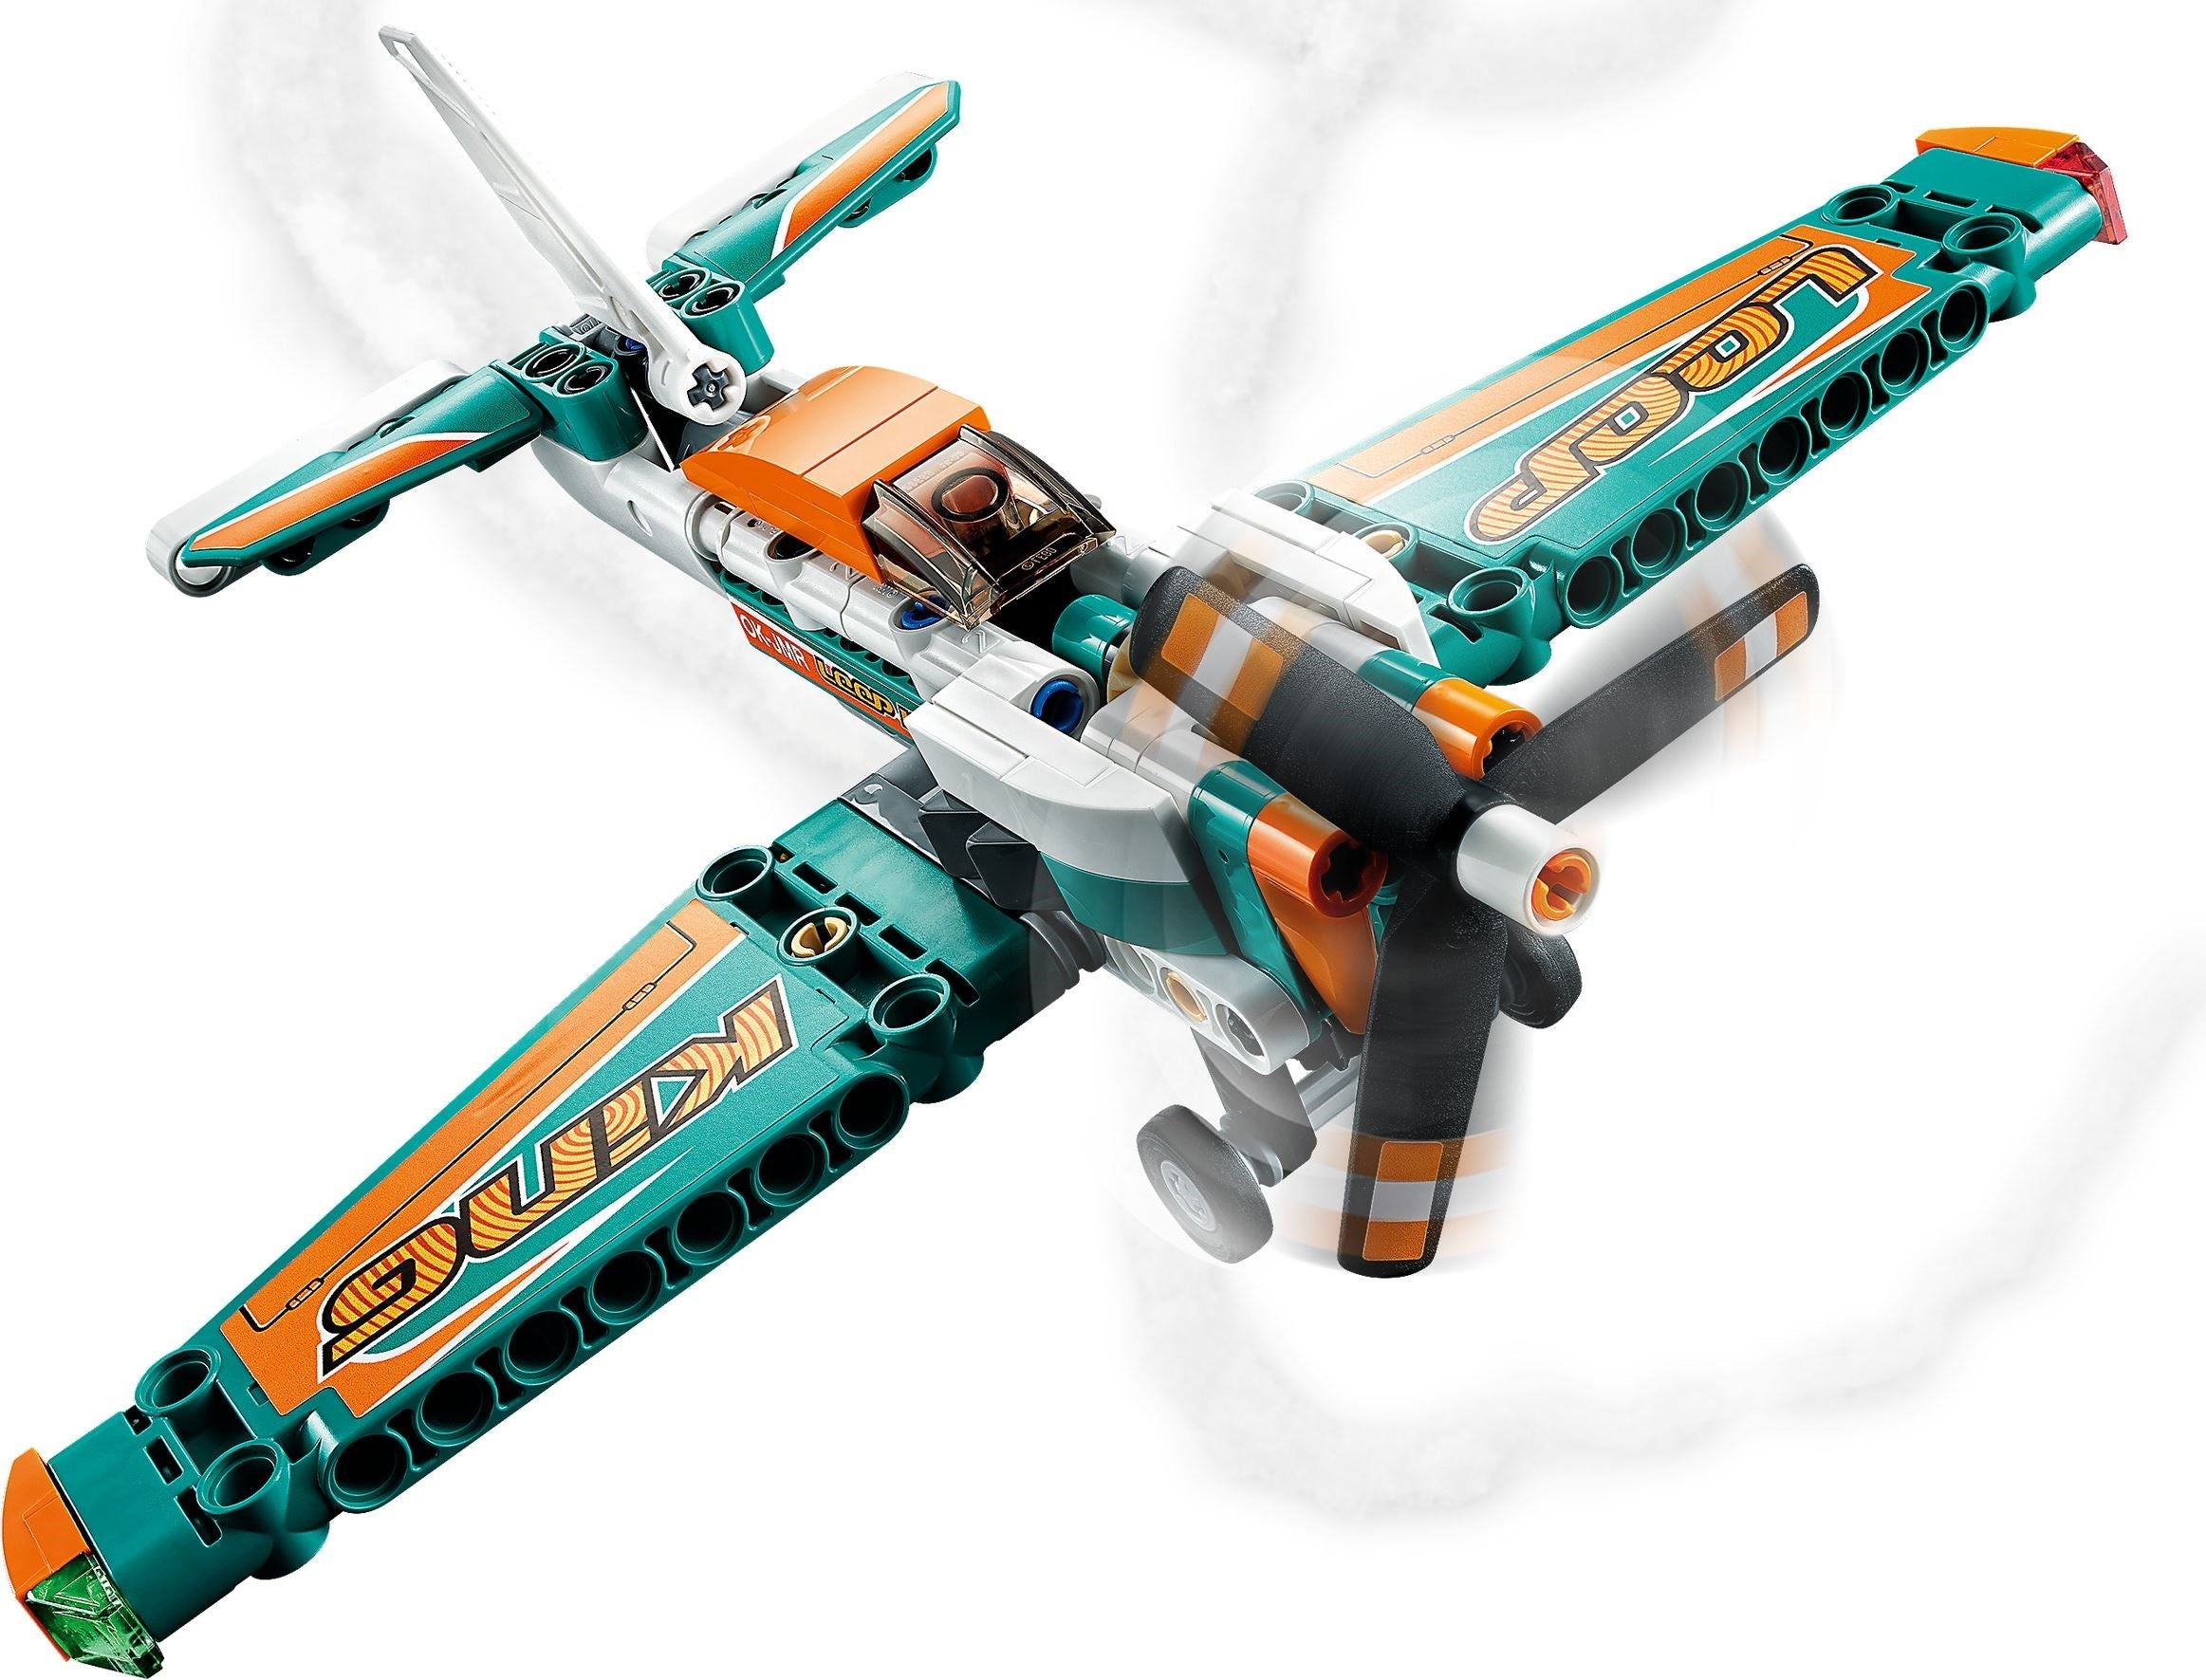 LEGO 42117 Race Plane